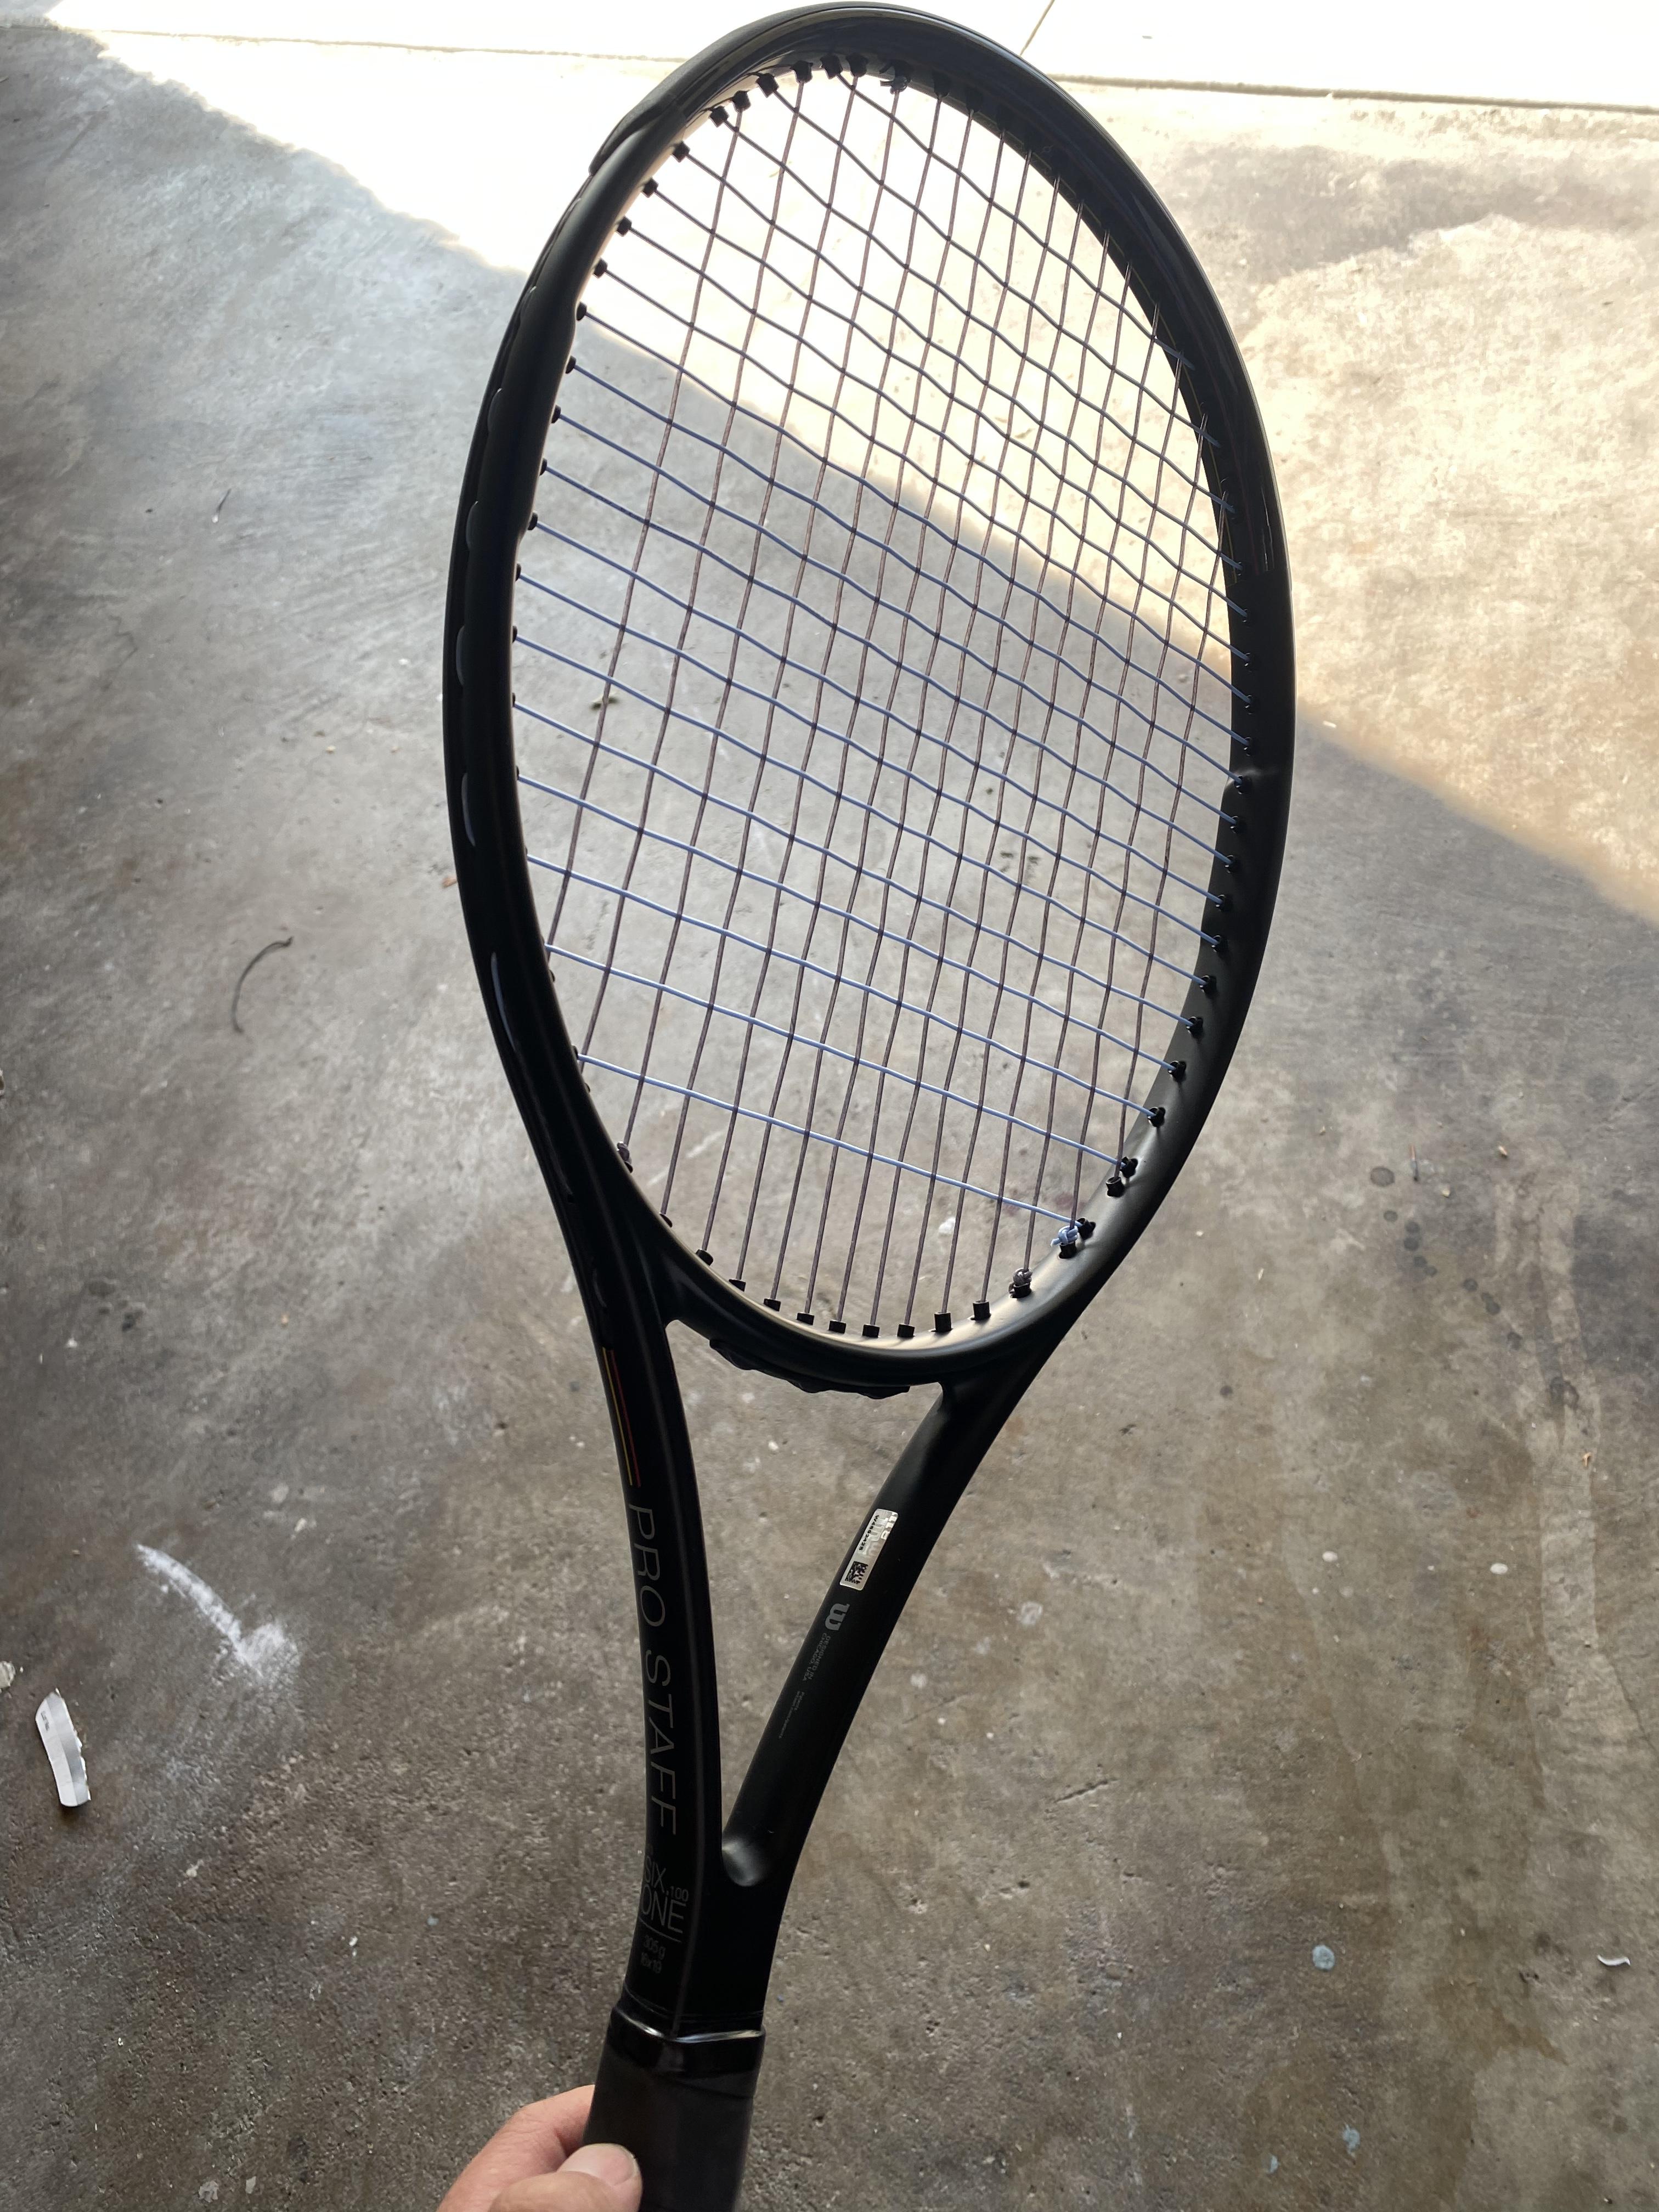 Tennis New Luxilon ALU Power Rough 16L String 1.25mm 40 Ft Grey Set Of 4 Pkgs 